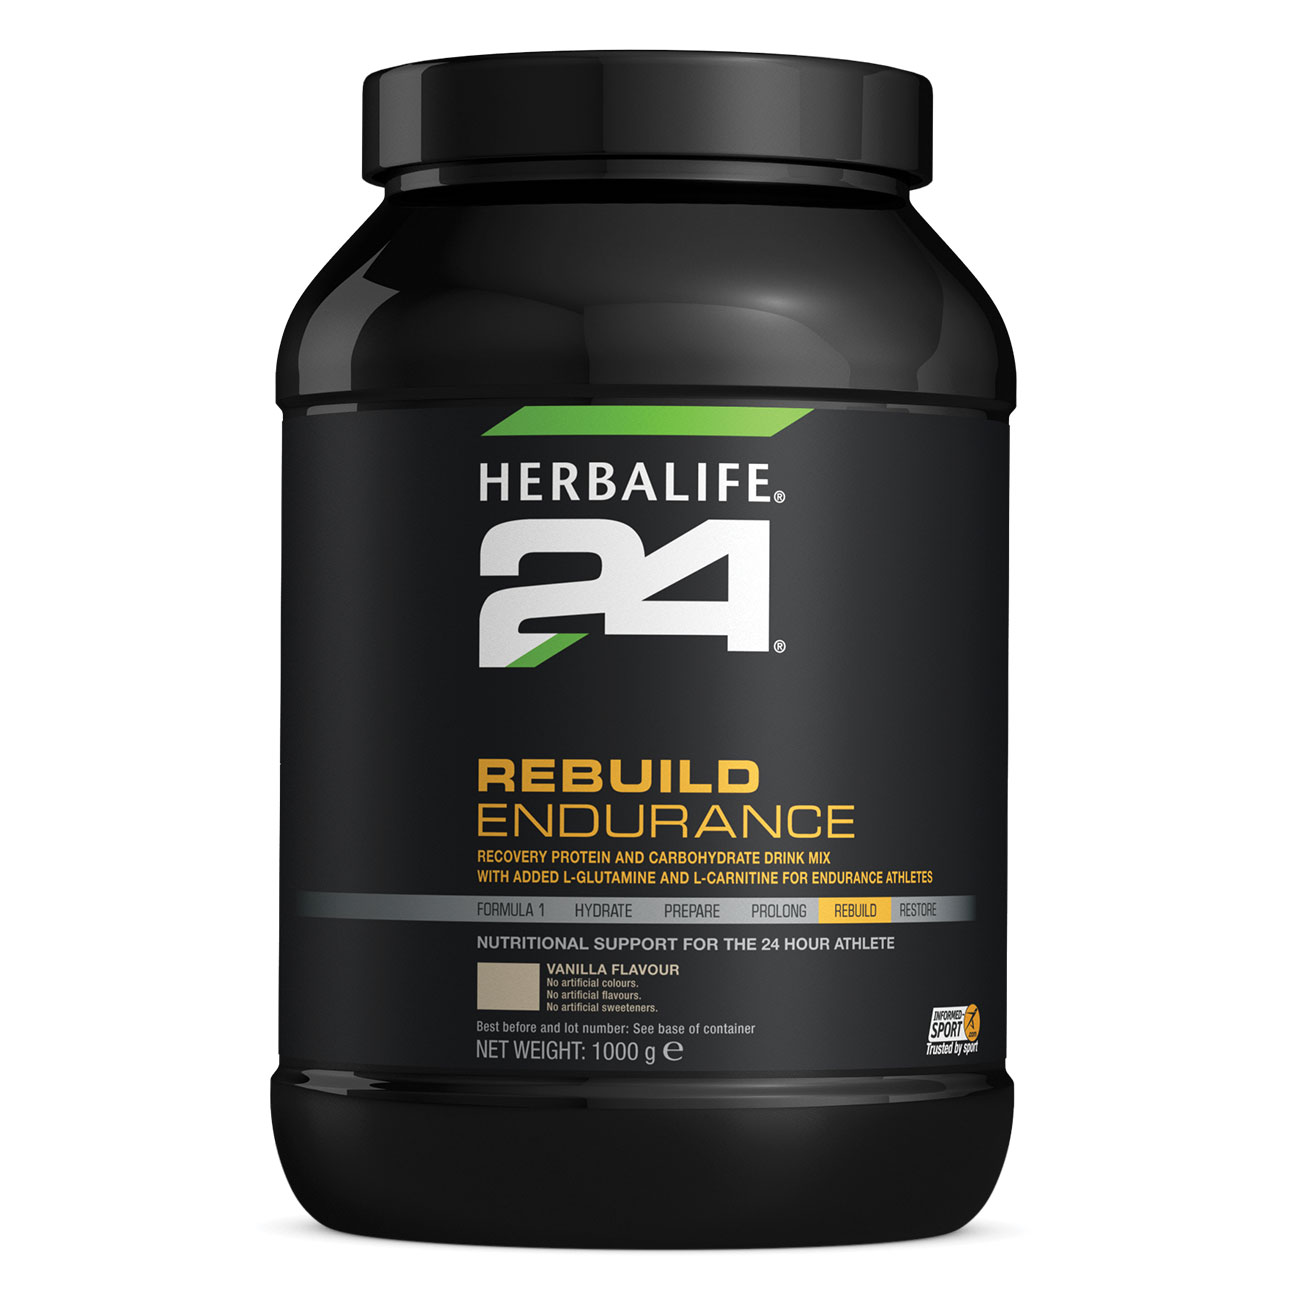 Herbalife24® Rebuild Endurance Protein Shake Vanilla product shot